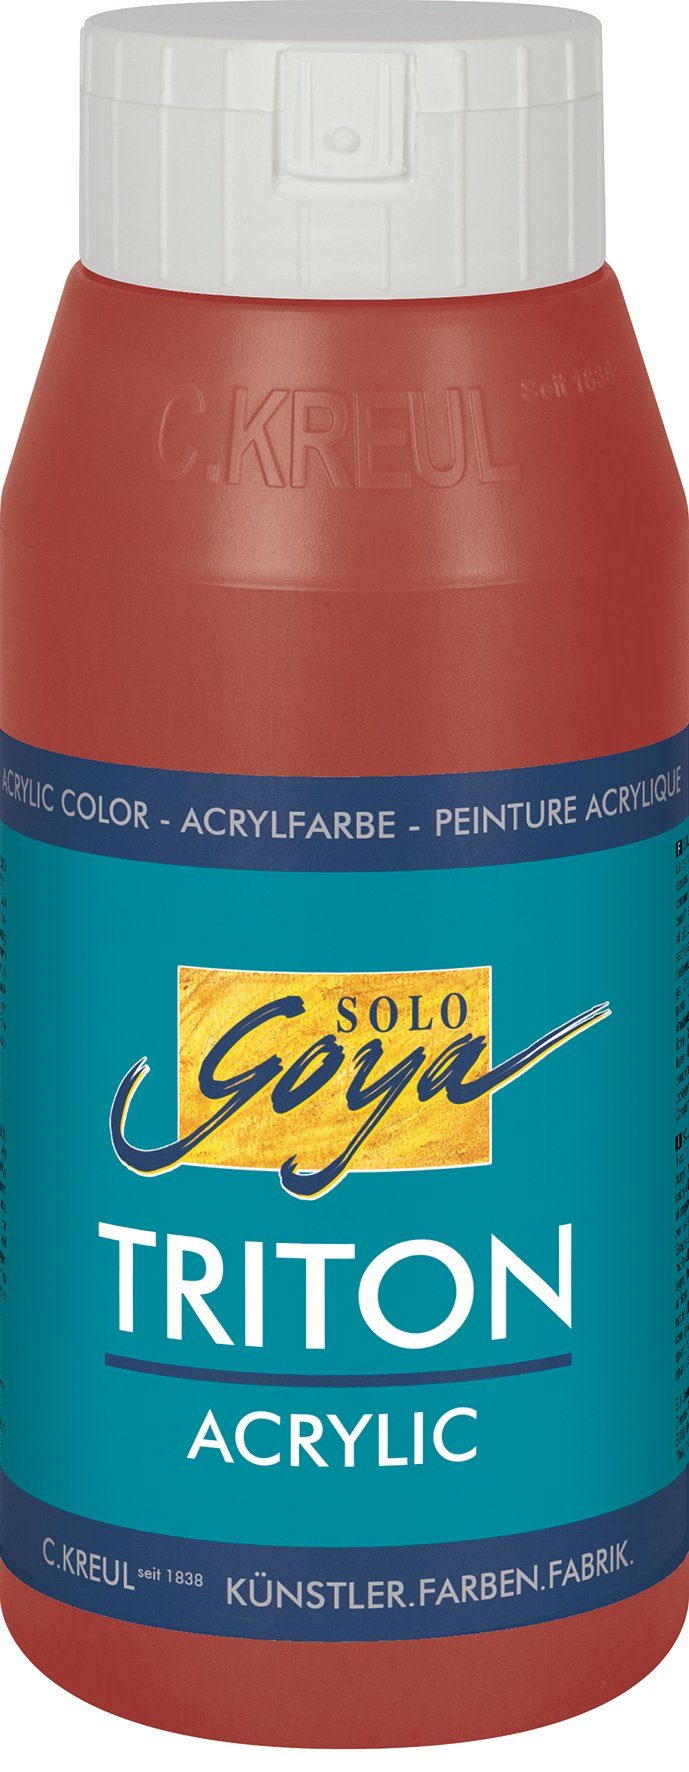 Kreul Acrylfarbe Solo Goya Triton Acrylic, 750 ml Oxydrot